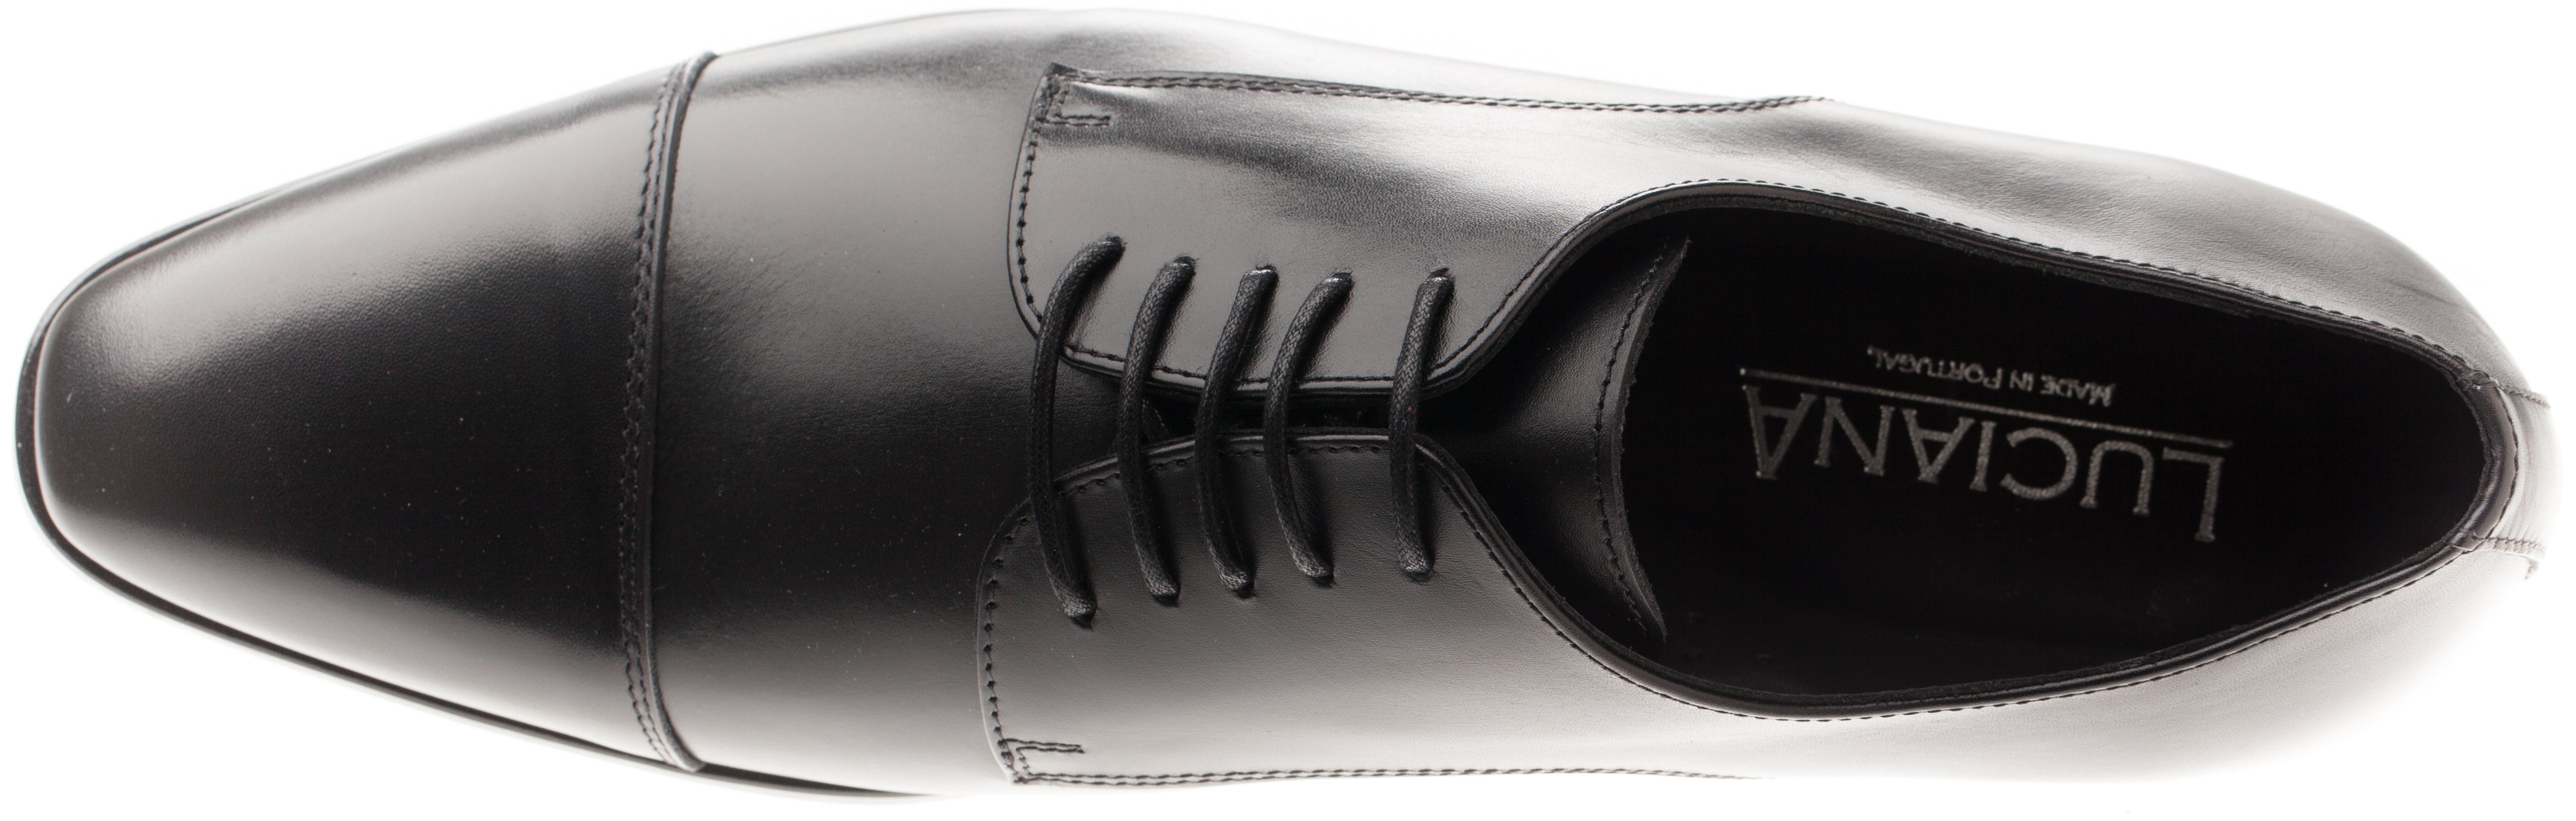 Luciana Men's Black Leather Cap toe Dress Shoe 6305